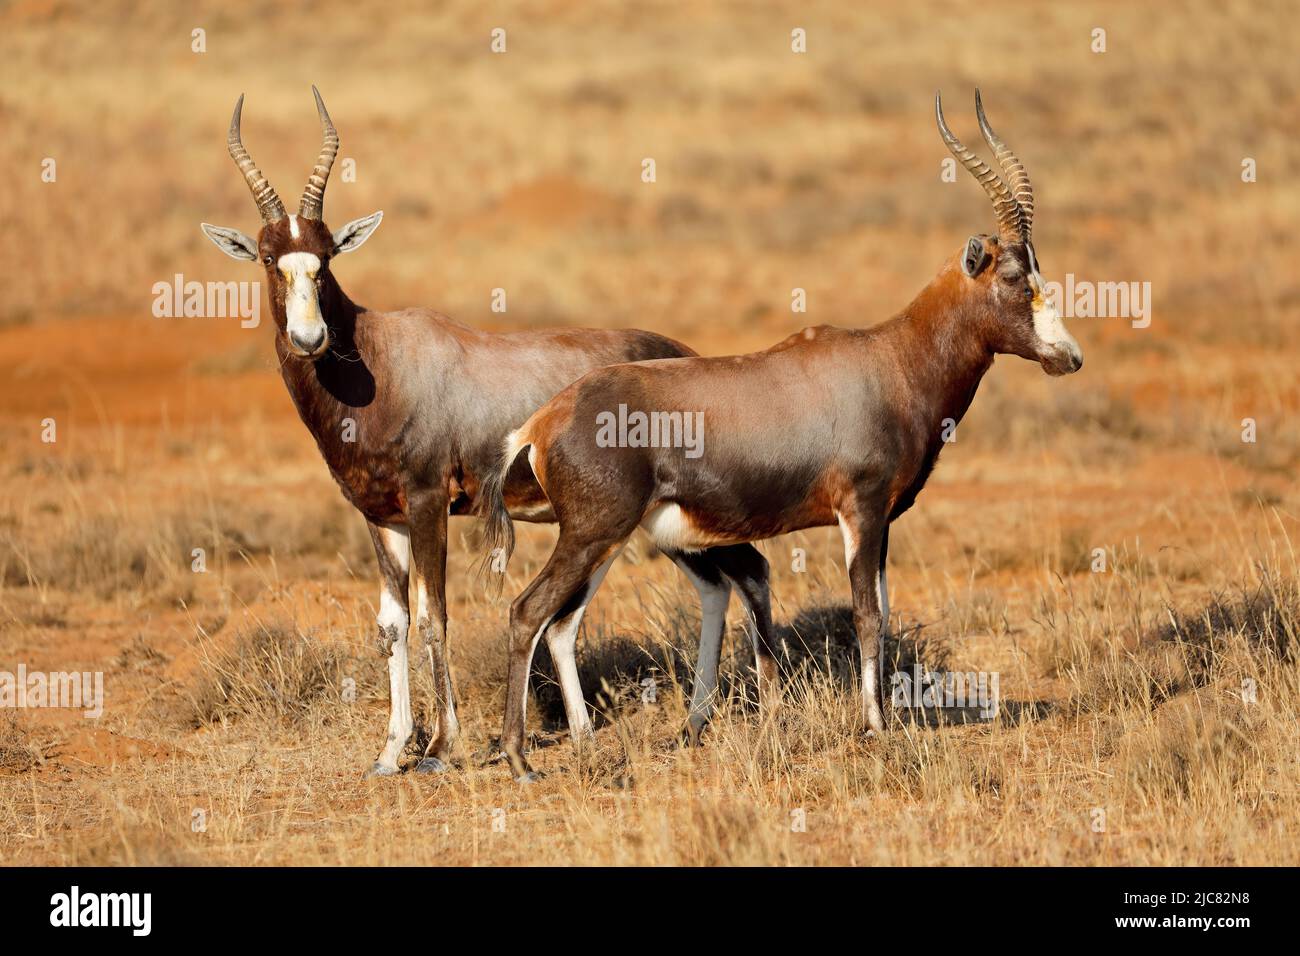 Blesbok antelopes (Damaliscus pygargus) in natural habitat, Mountain Zebra National Park, South Africa Stock Photo